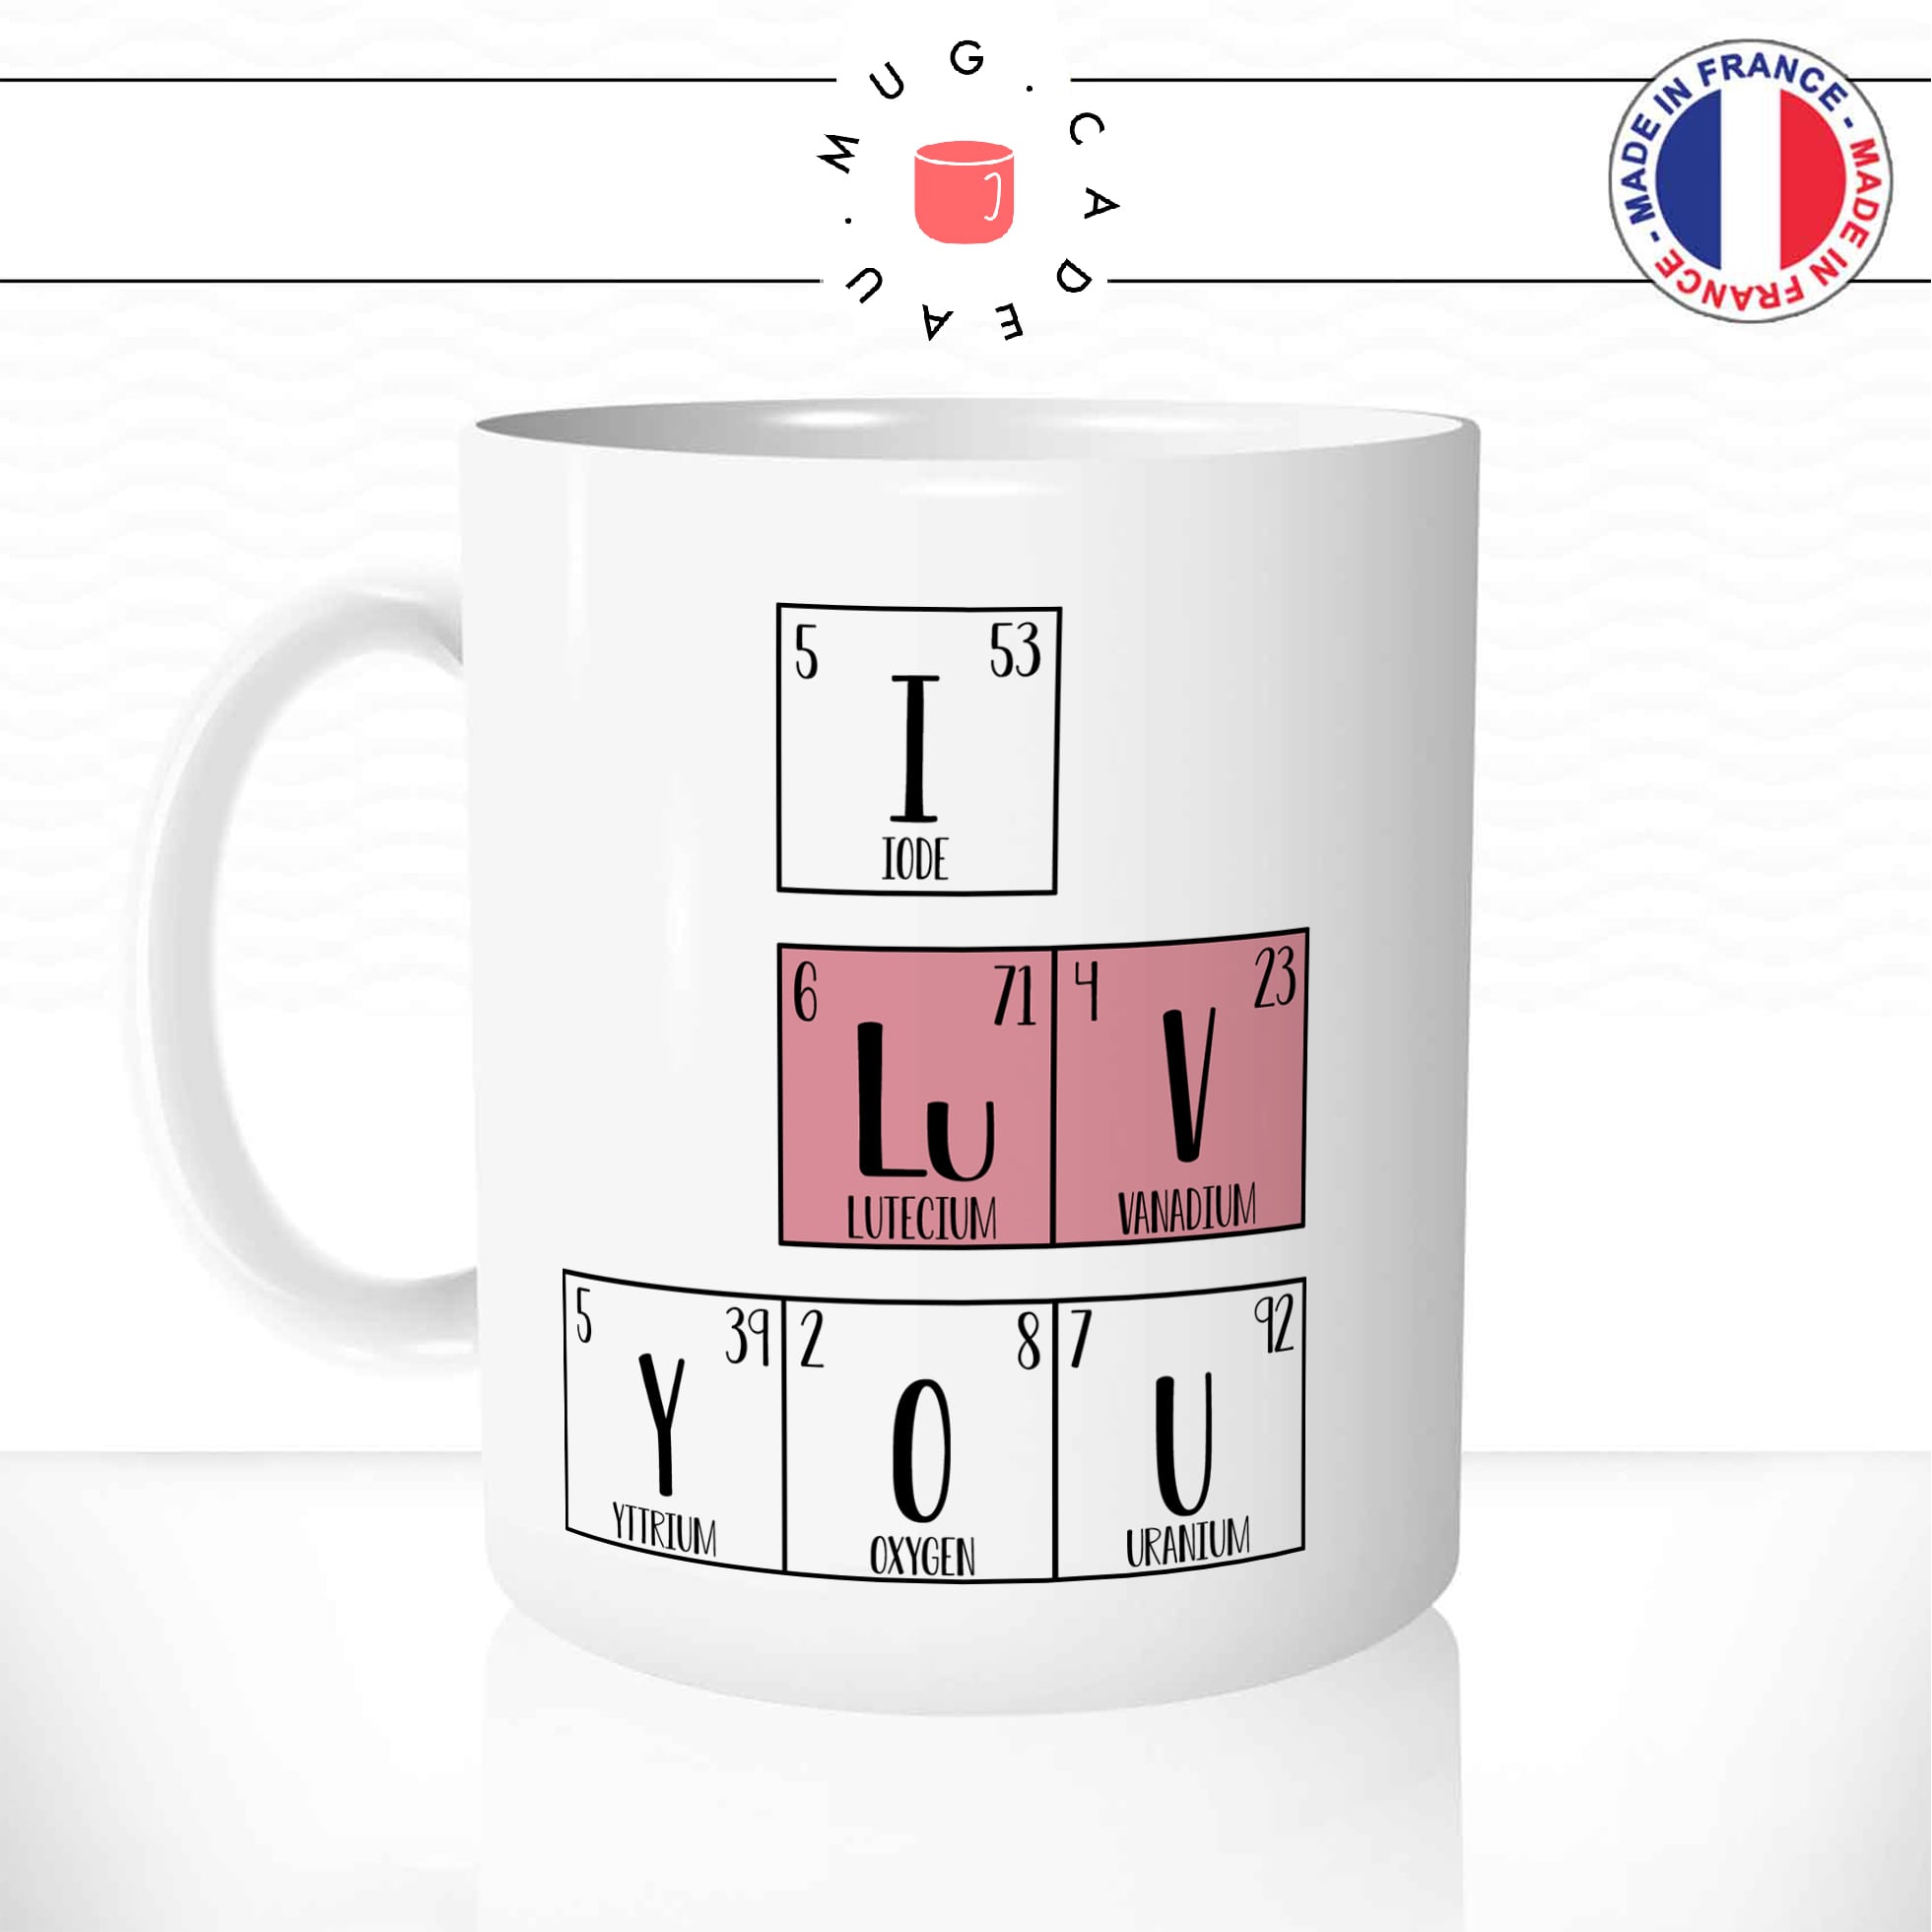 mug-tasse-i-love-you-elements-tableau-periodique-science-amour-couple-idee-cadeau-je-taime1